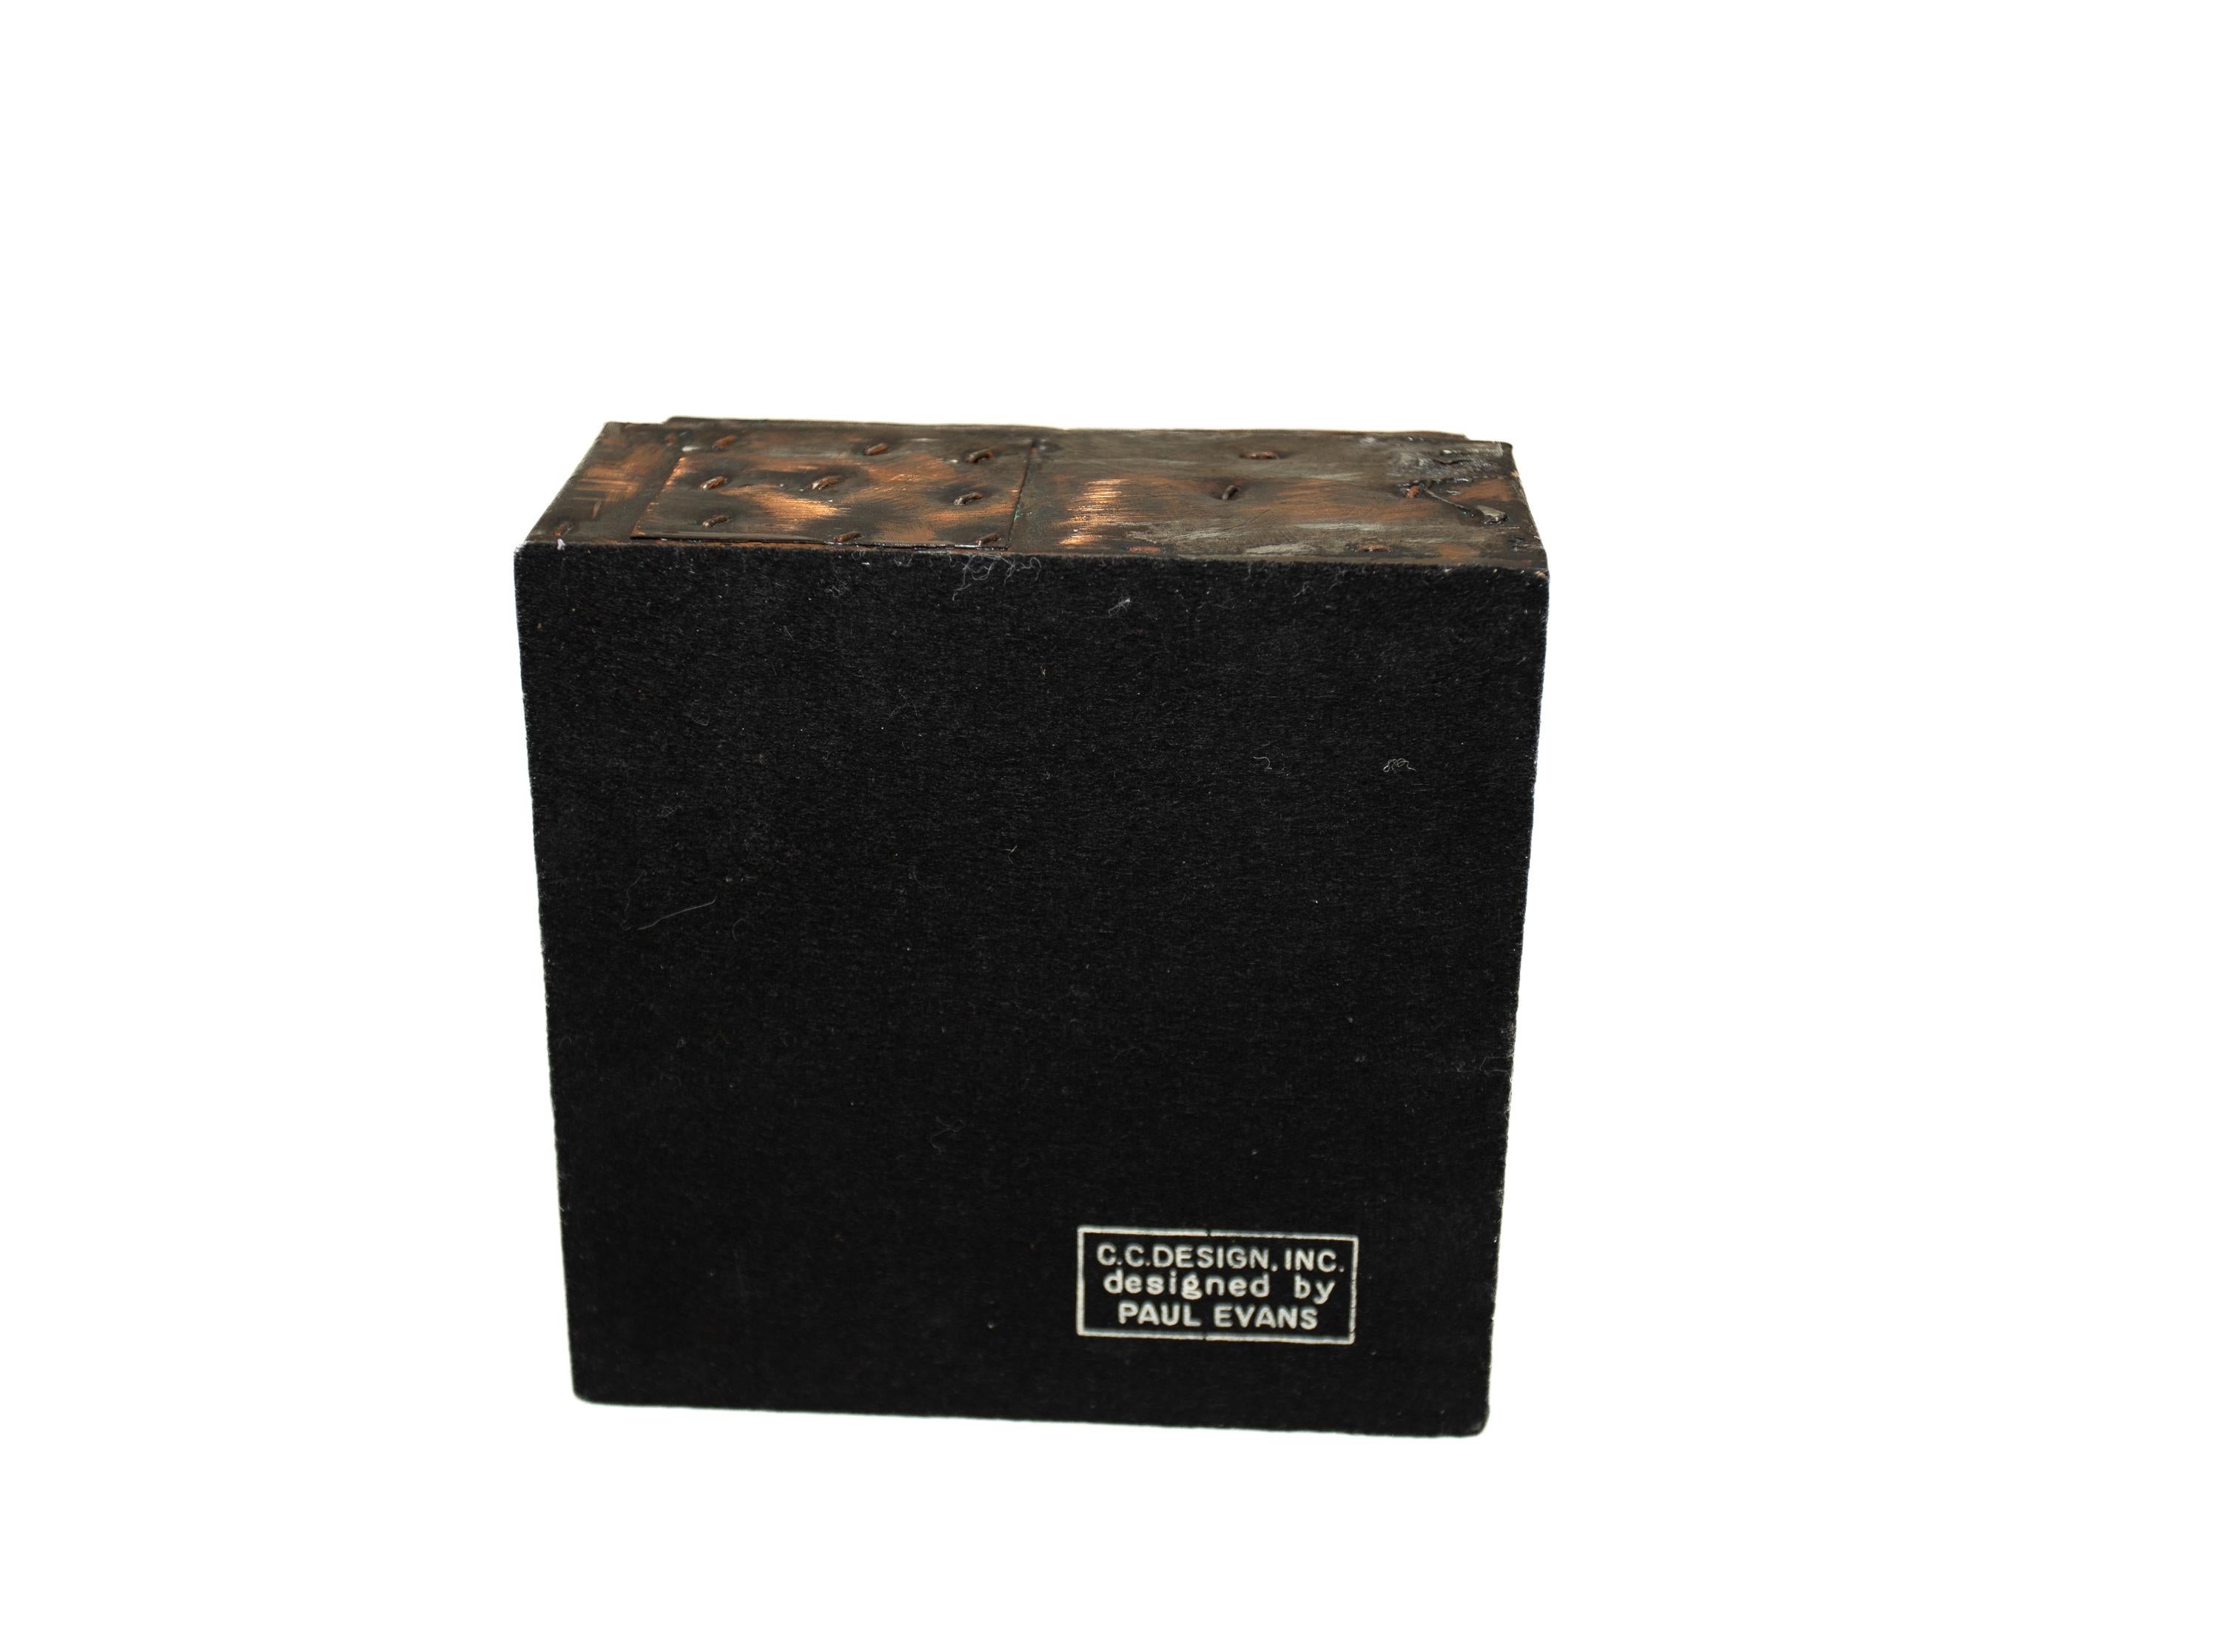 Paul Evans Riveted Copper Clad Box For Sale 4